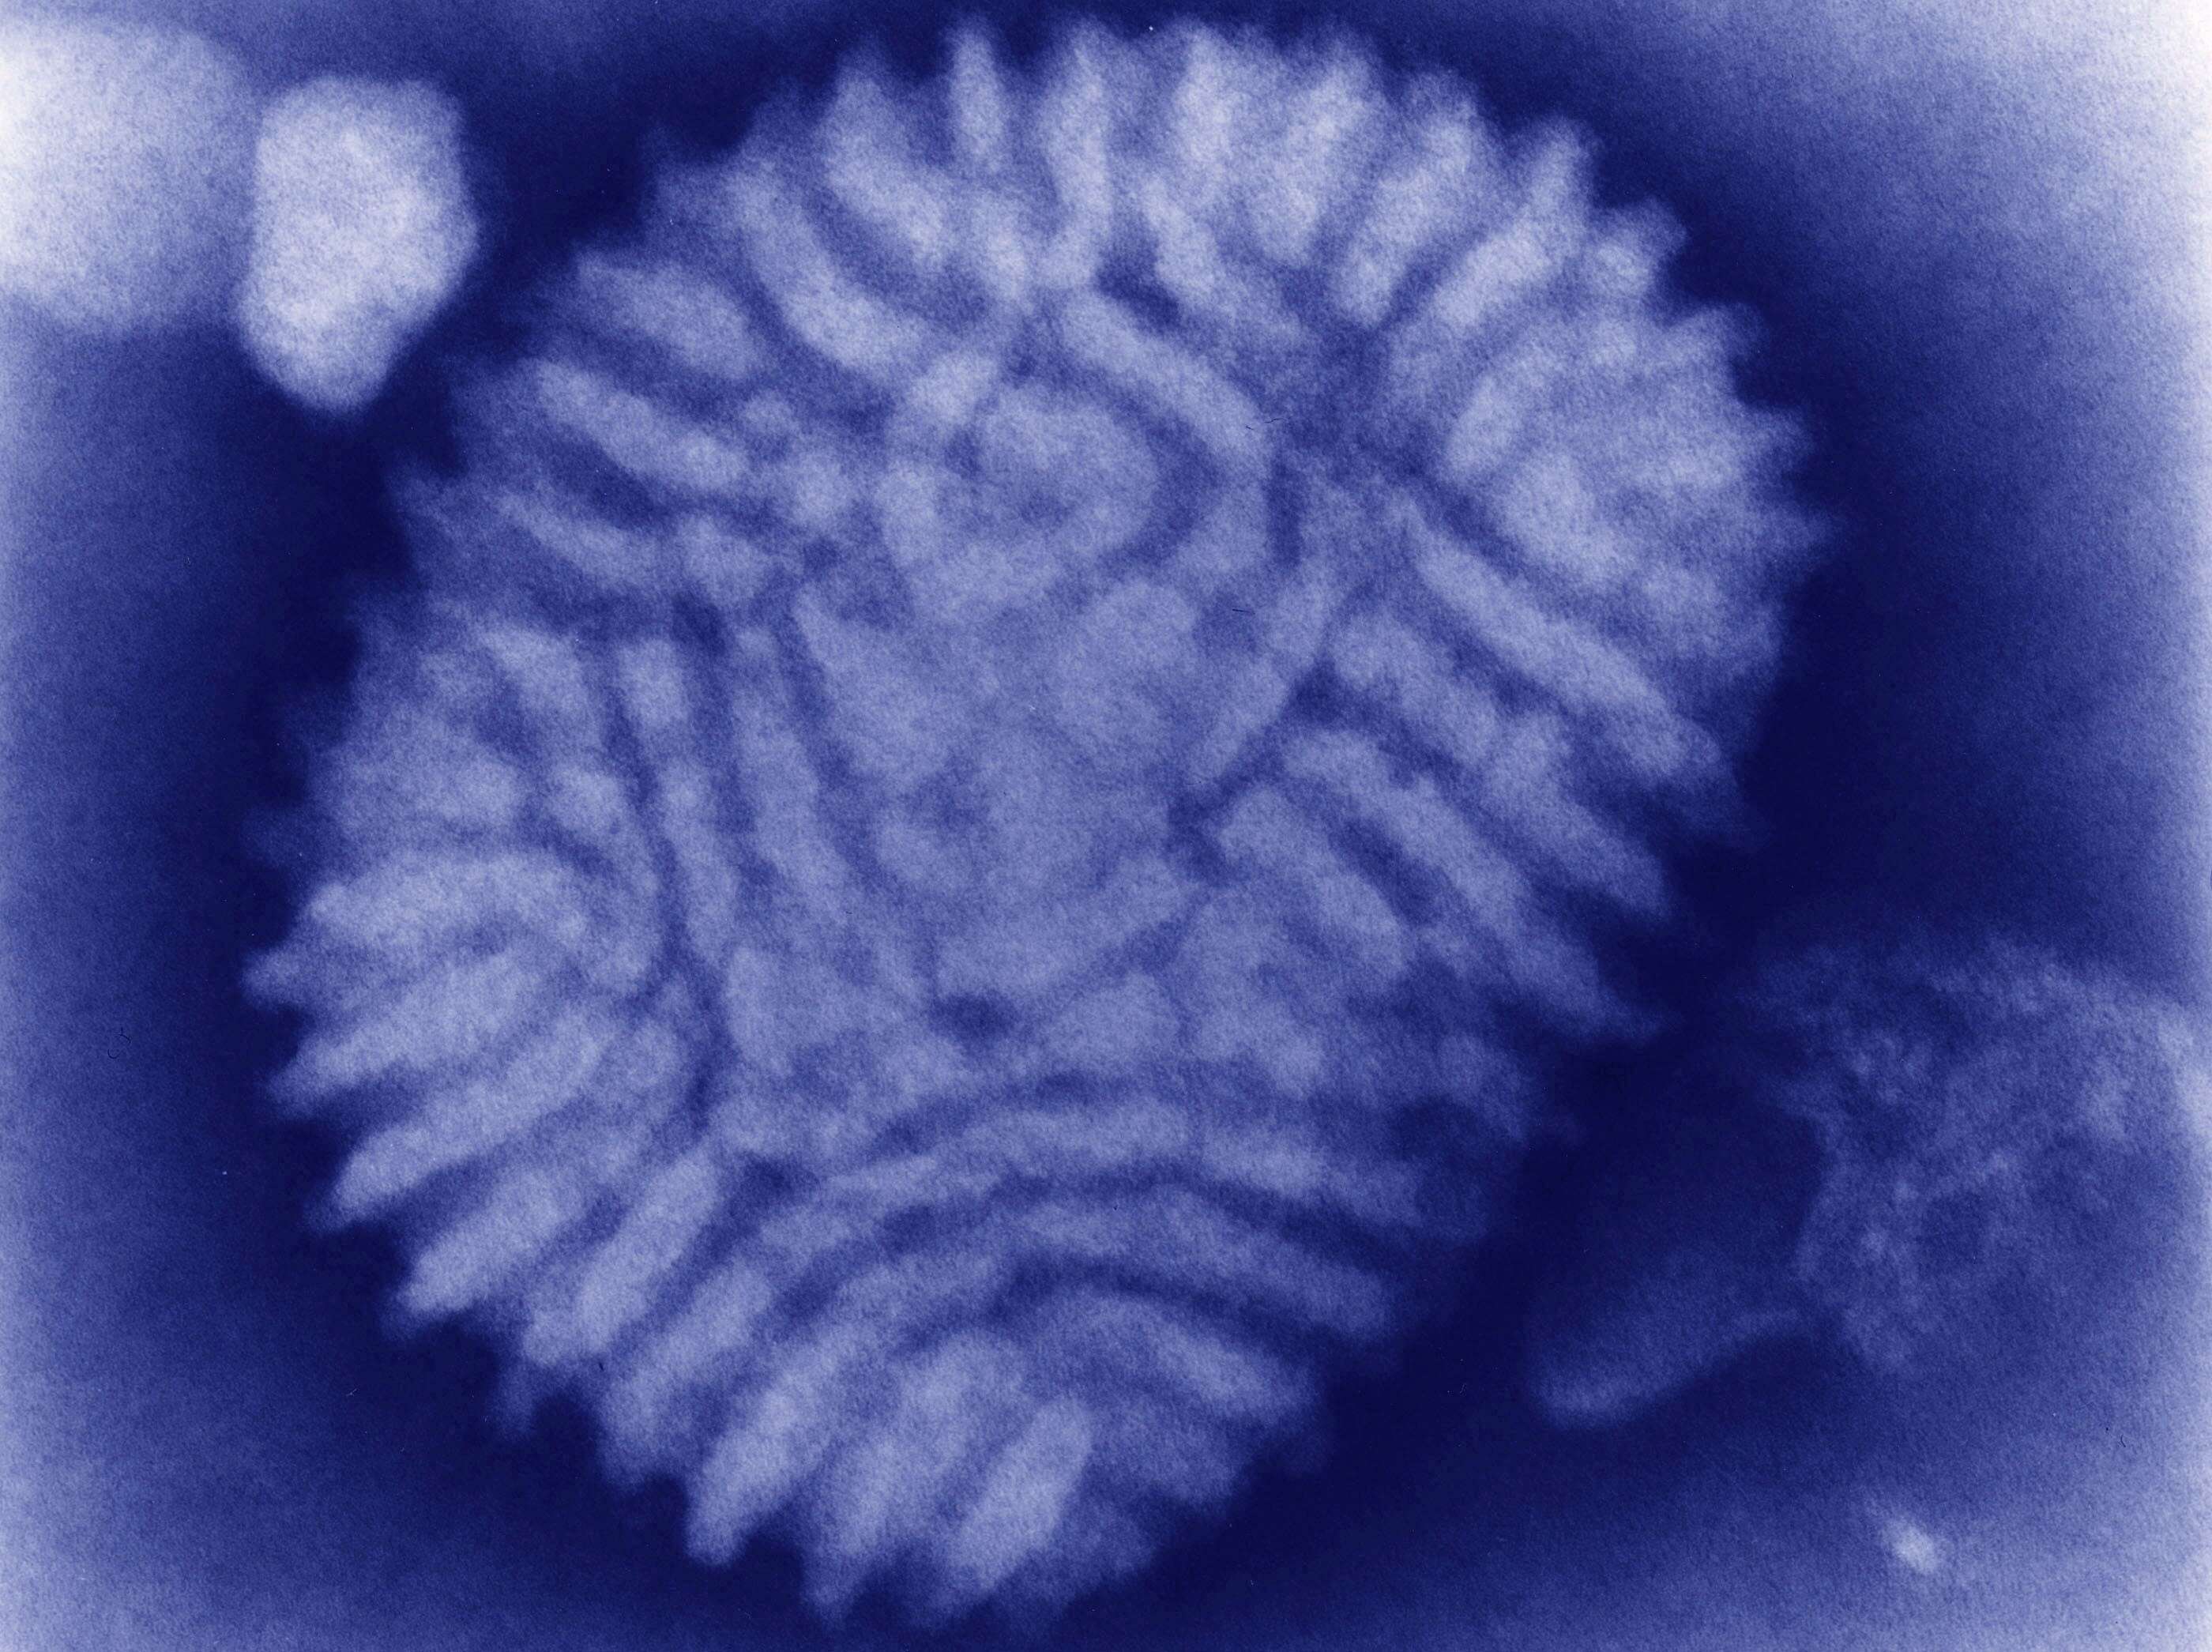 Plancia ëd Myxoma virus